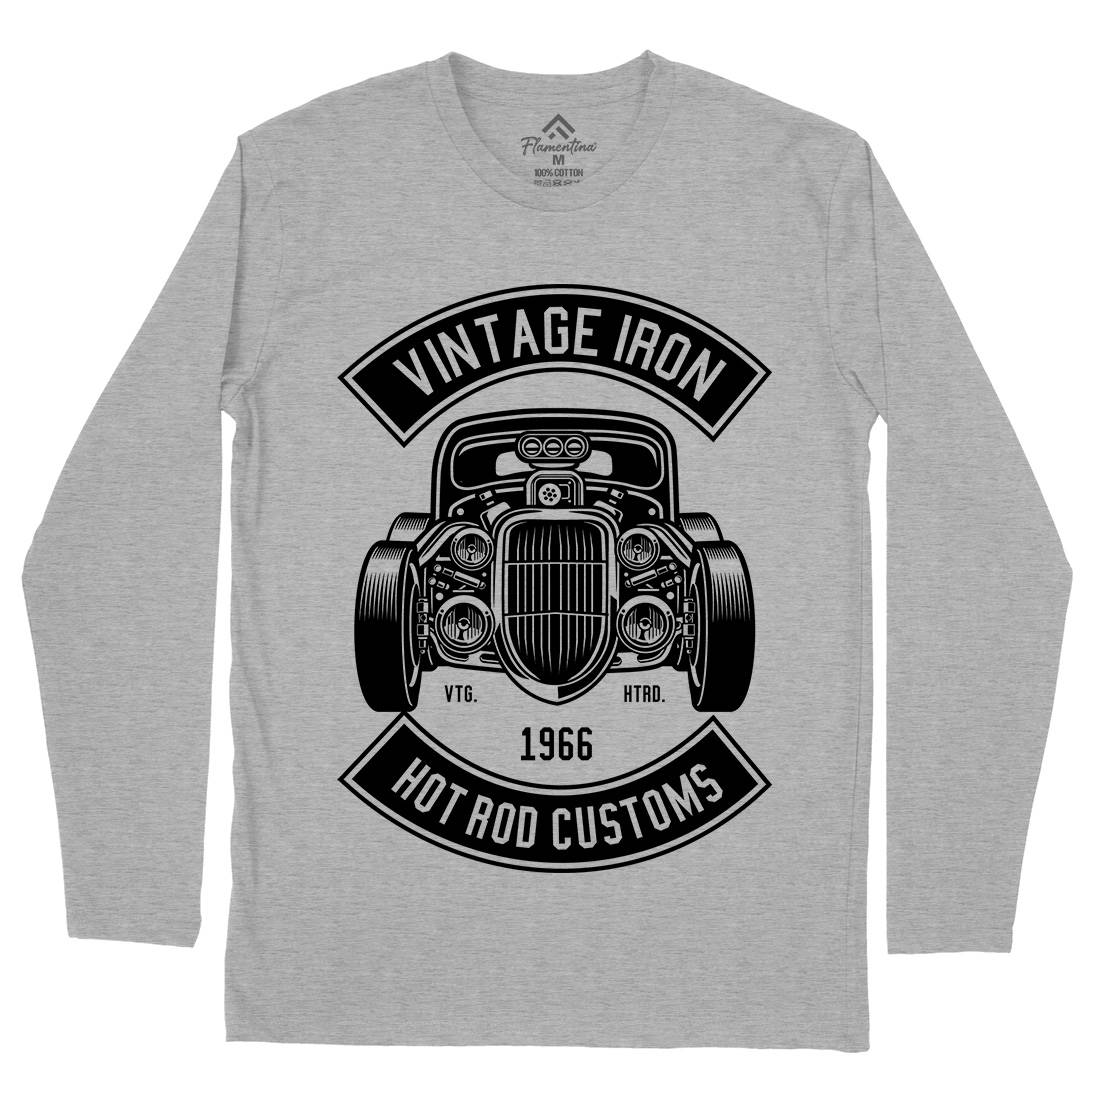 Vintage Iron Mens Long Sleeve T-Shirt Cars B666